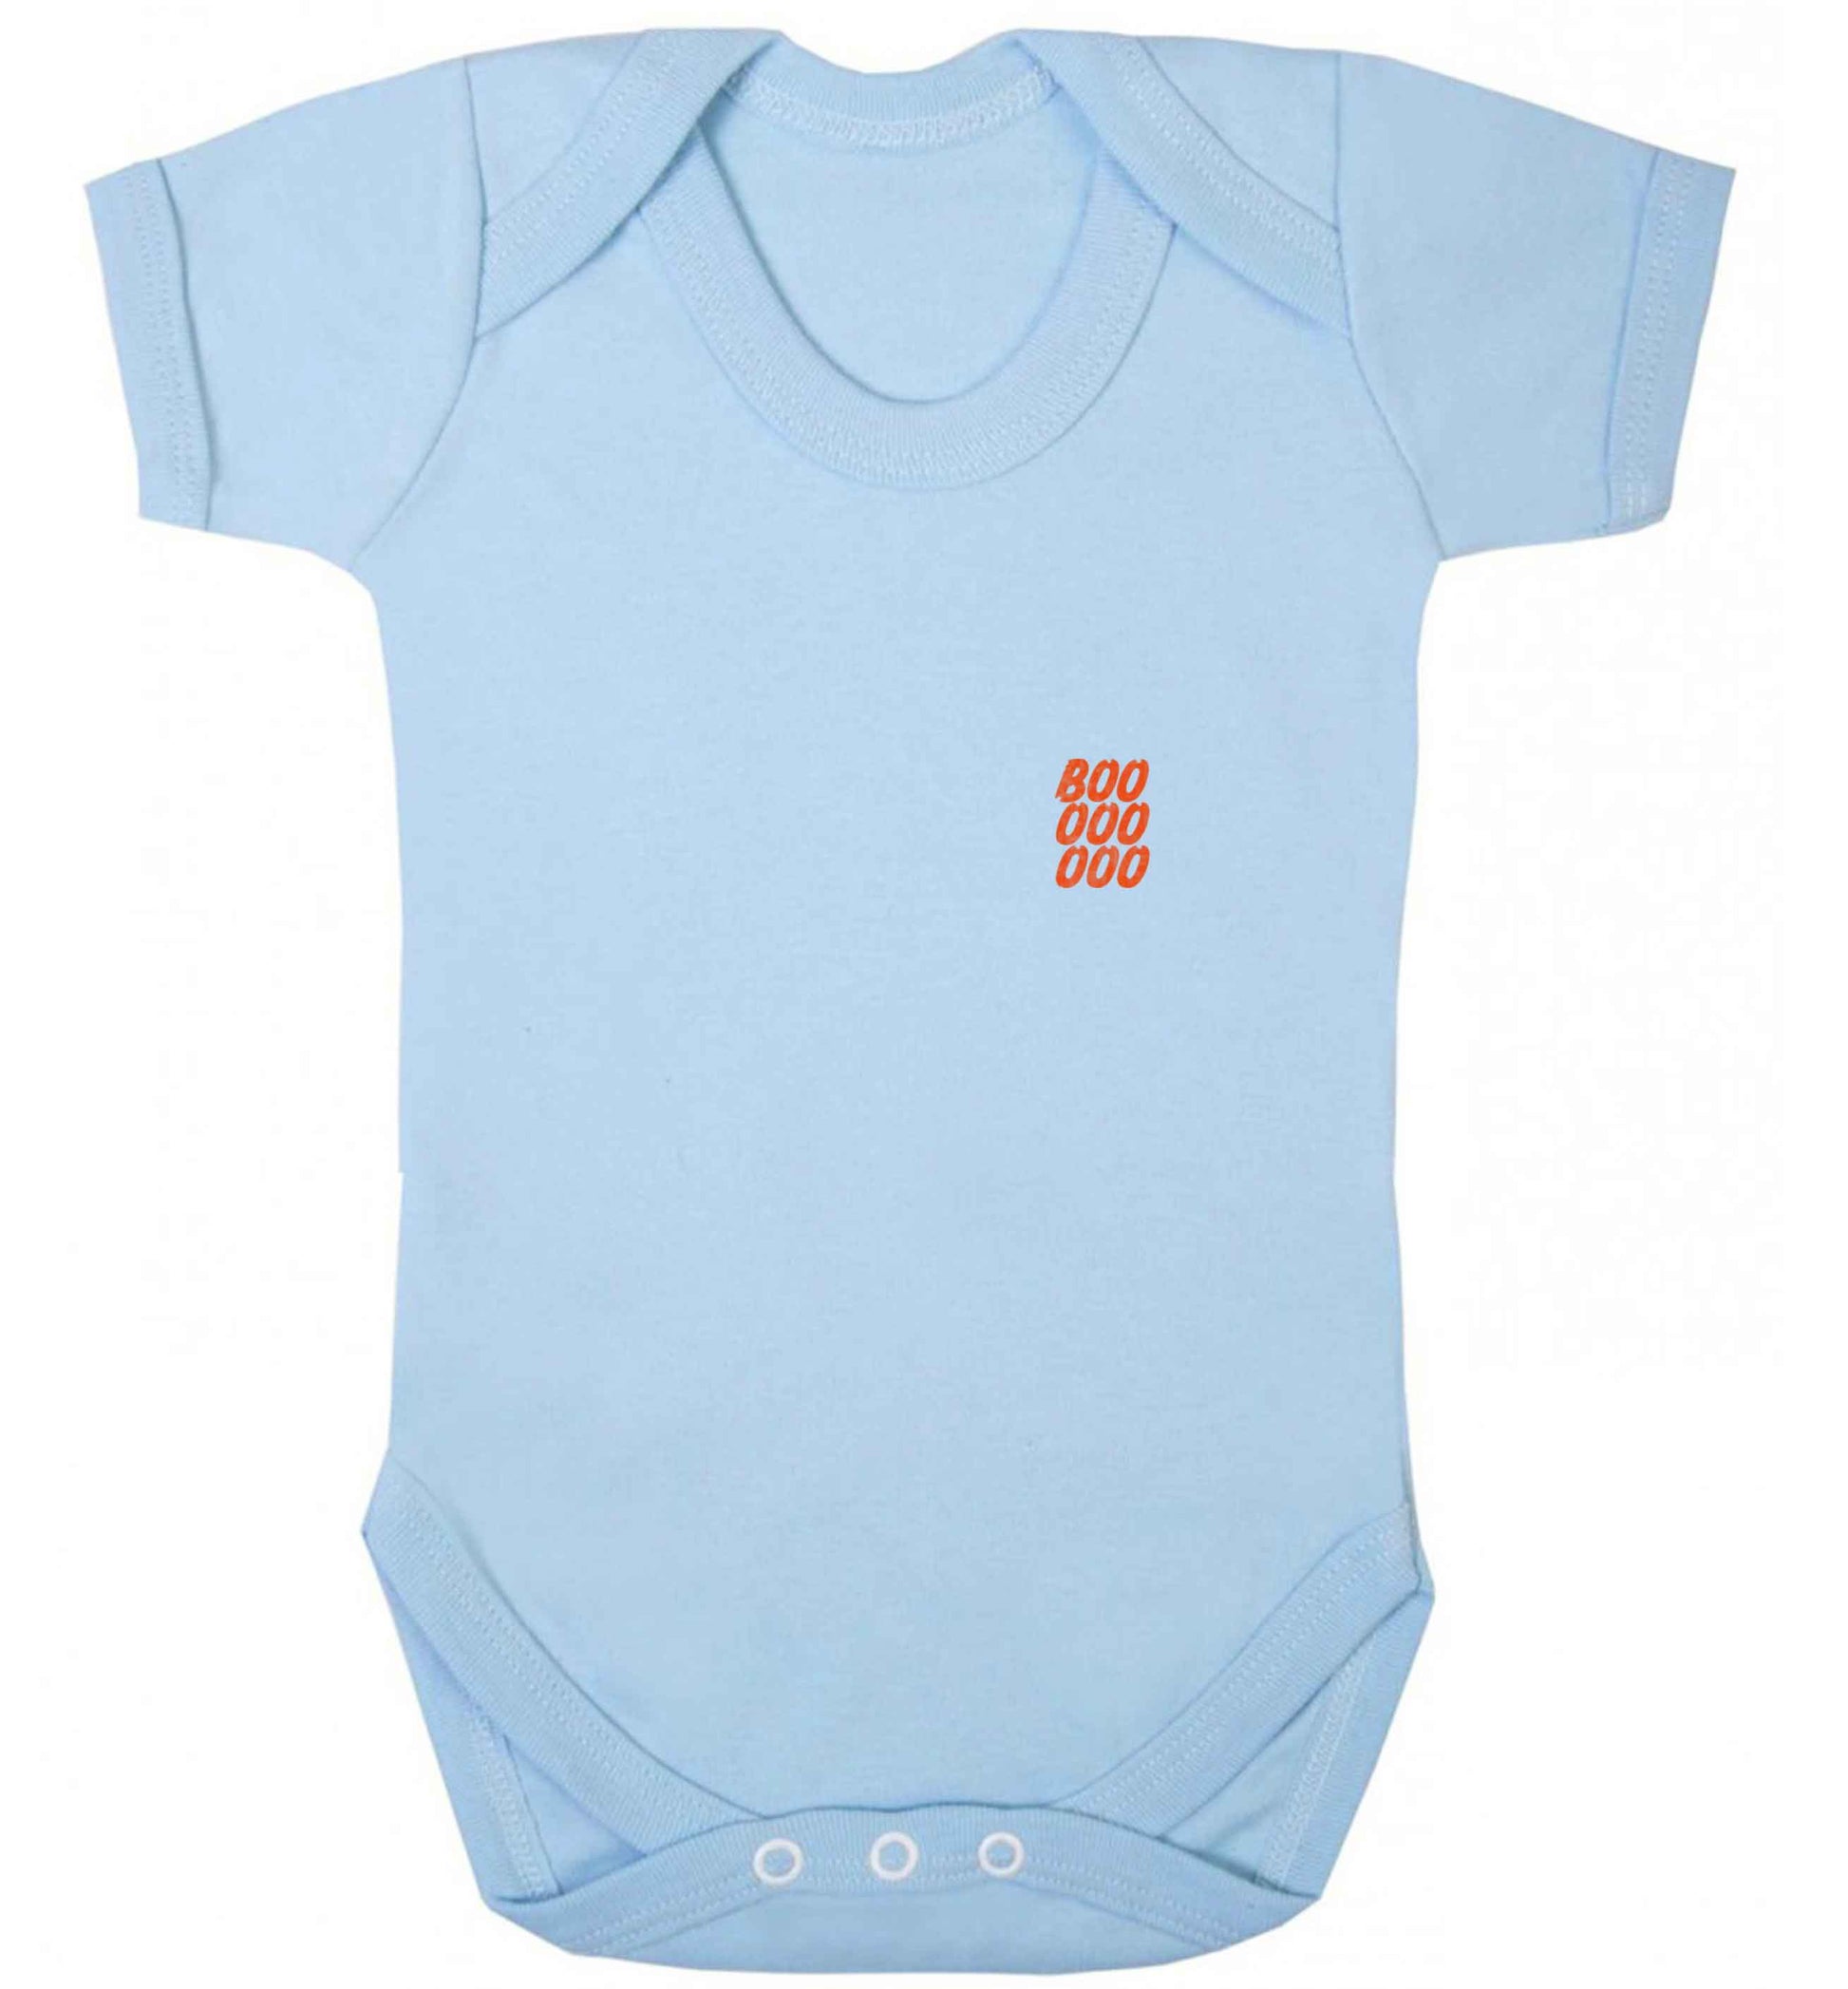 Boo pocket baby vest pale blue 18-24 months